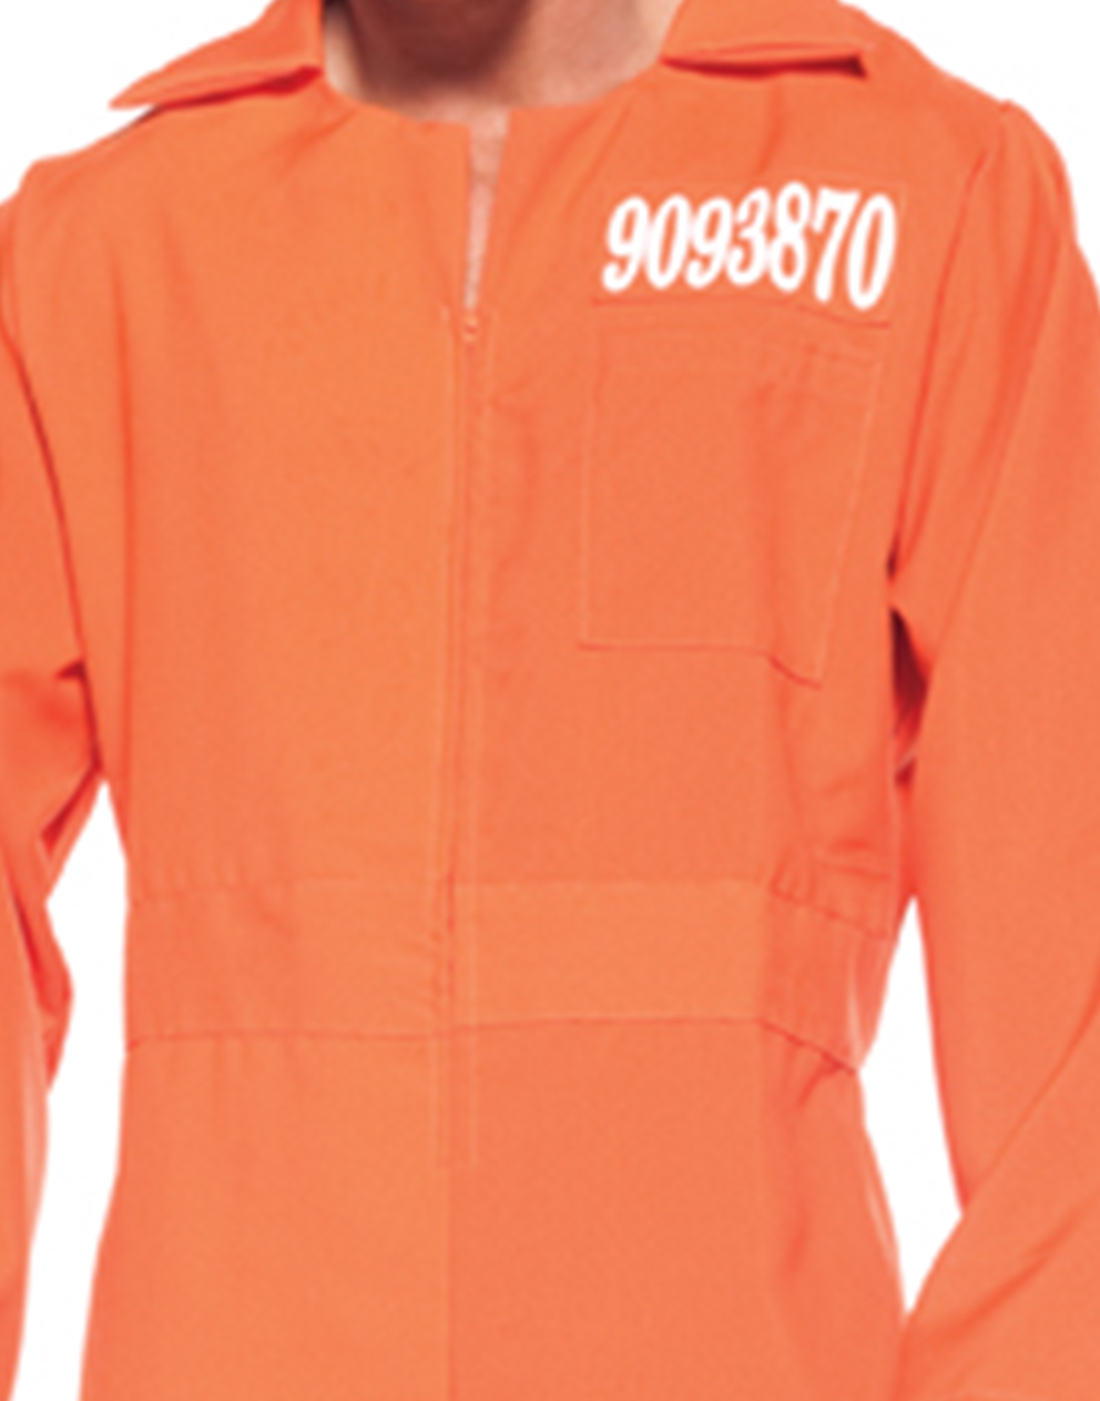 Underwraps Adult Orange Jumpsuit Costume - One Size - image 2 of 4